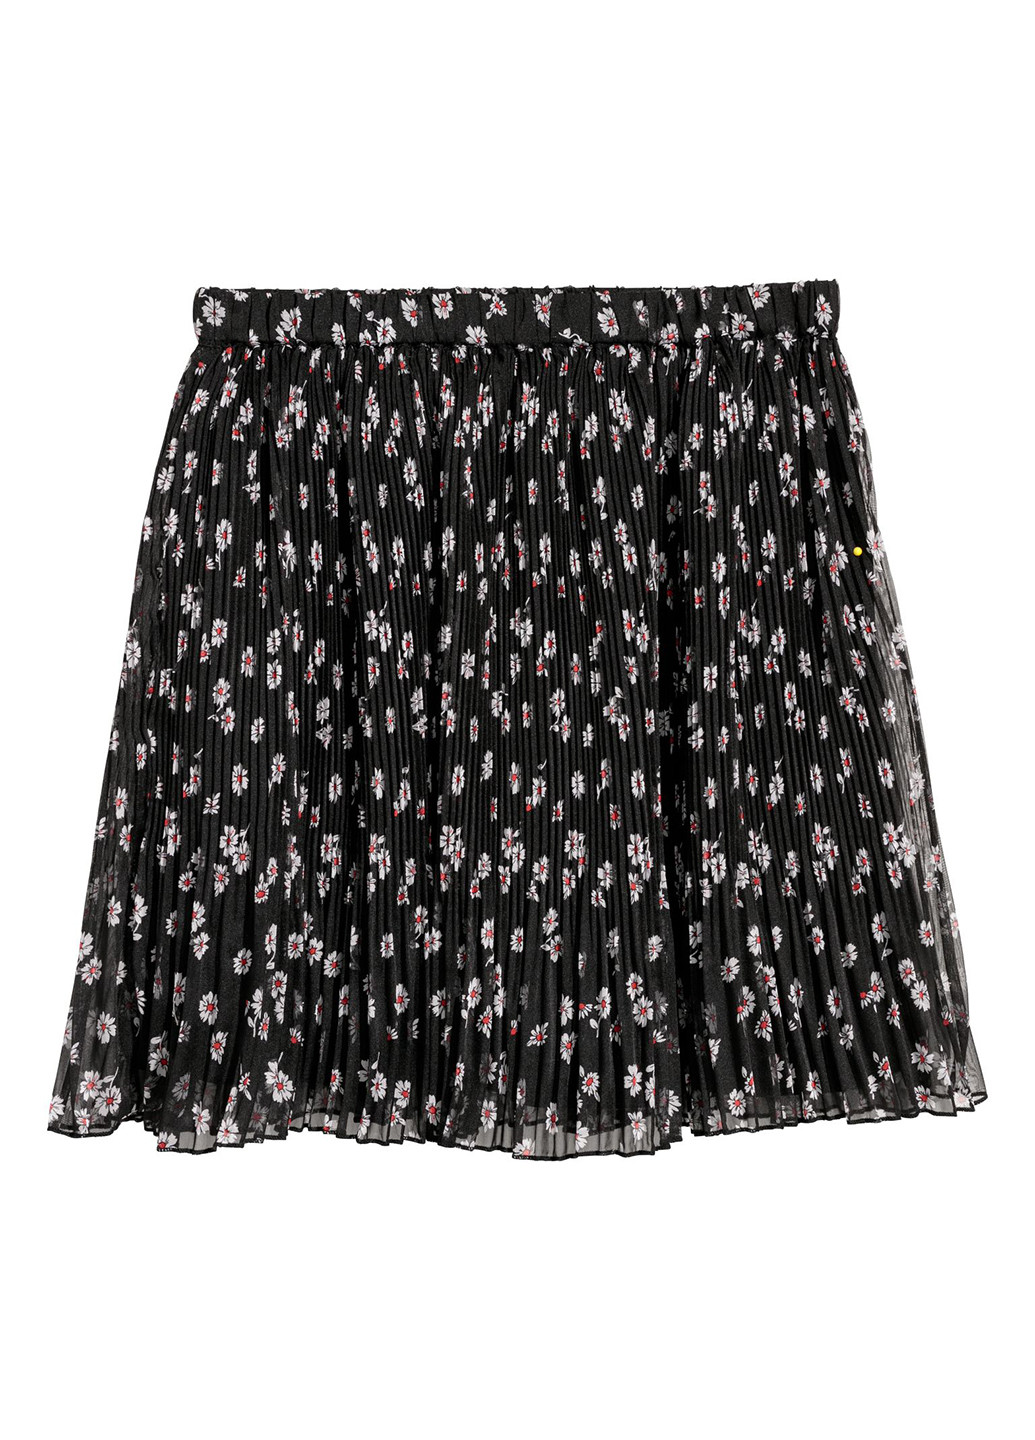 Черная кэжуал цветочной расцветки юбка H&M а-силуэта (трапеция), плиссе